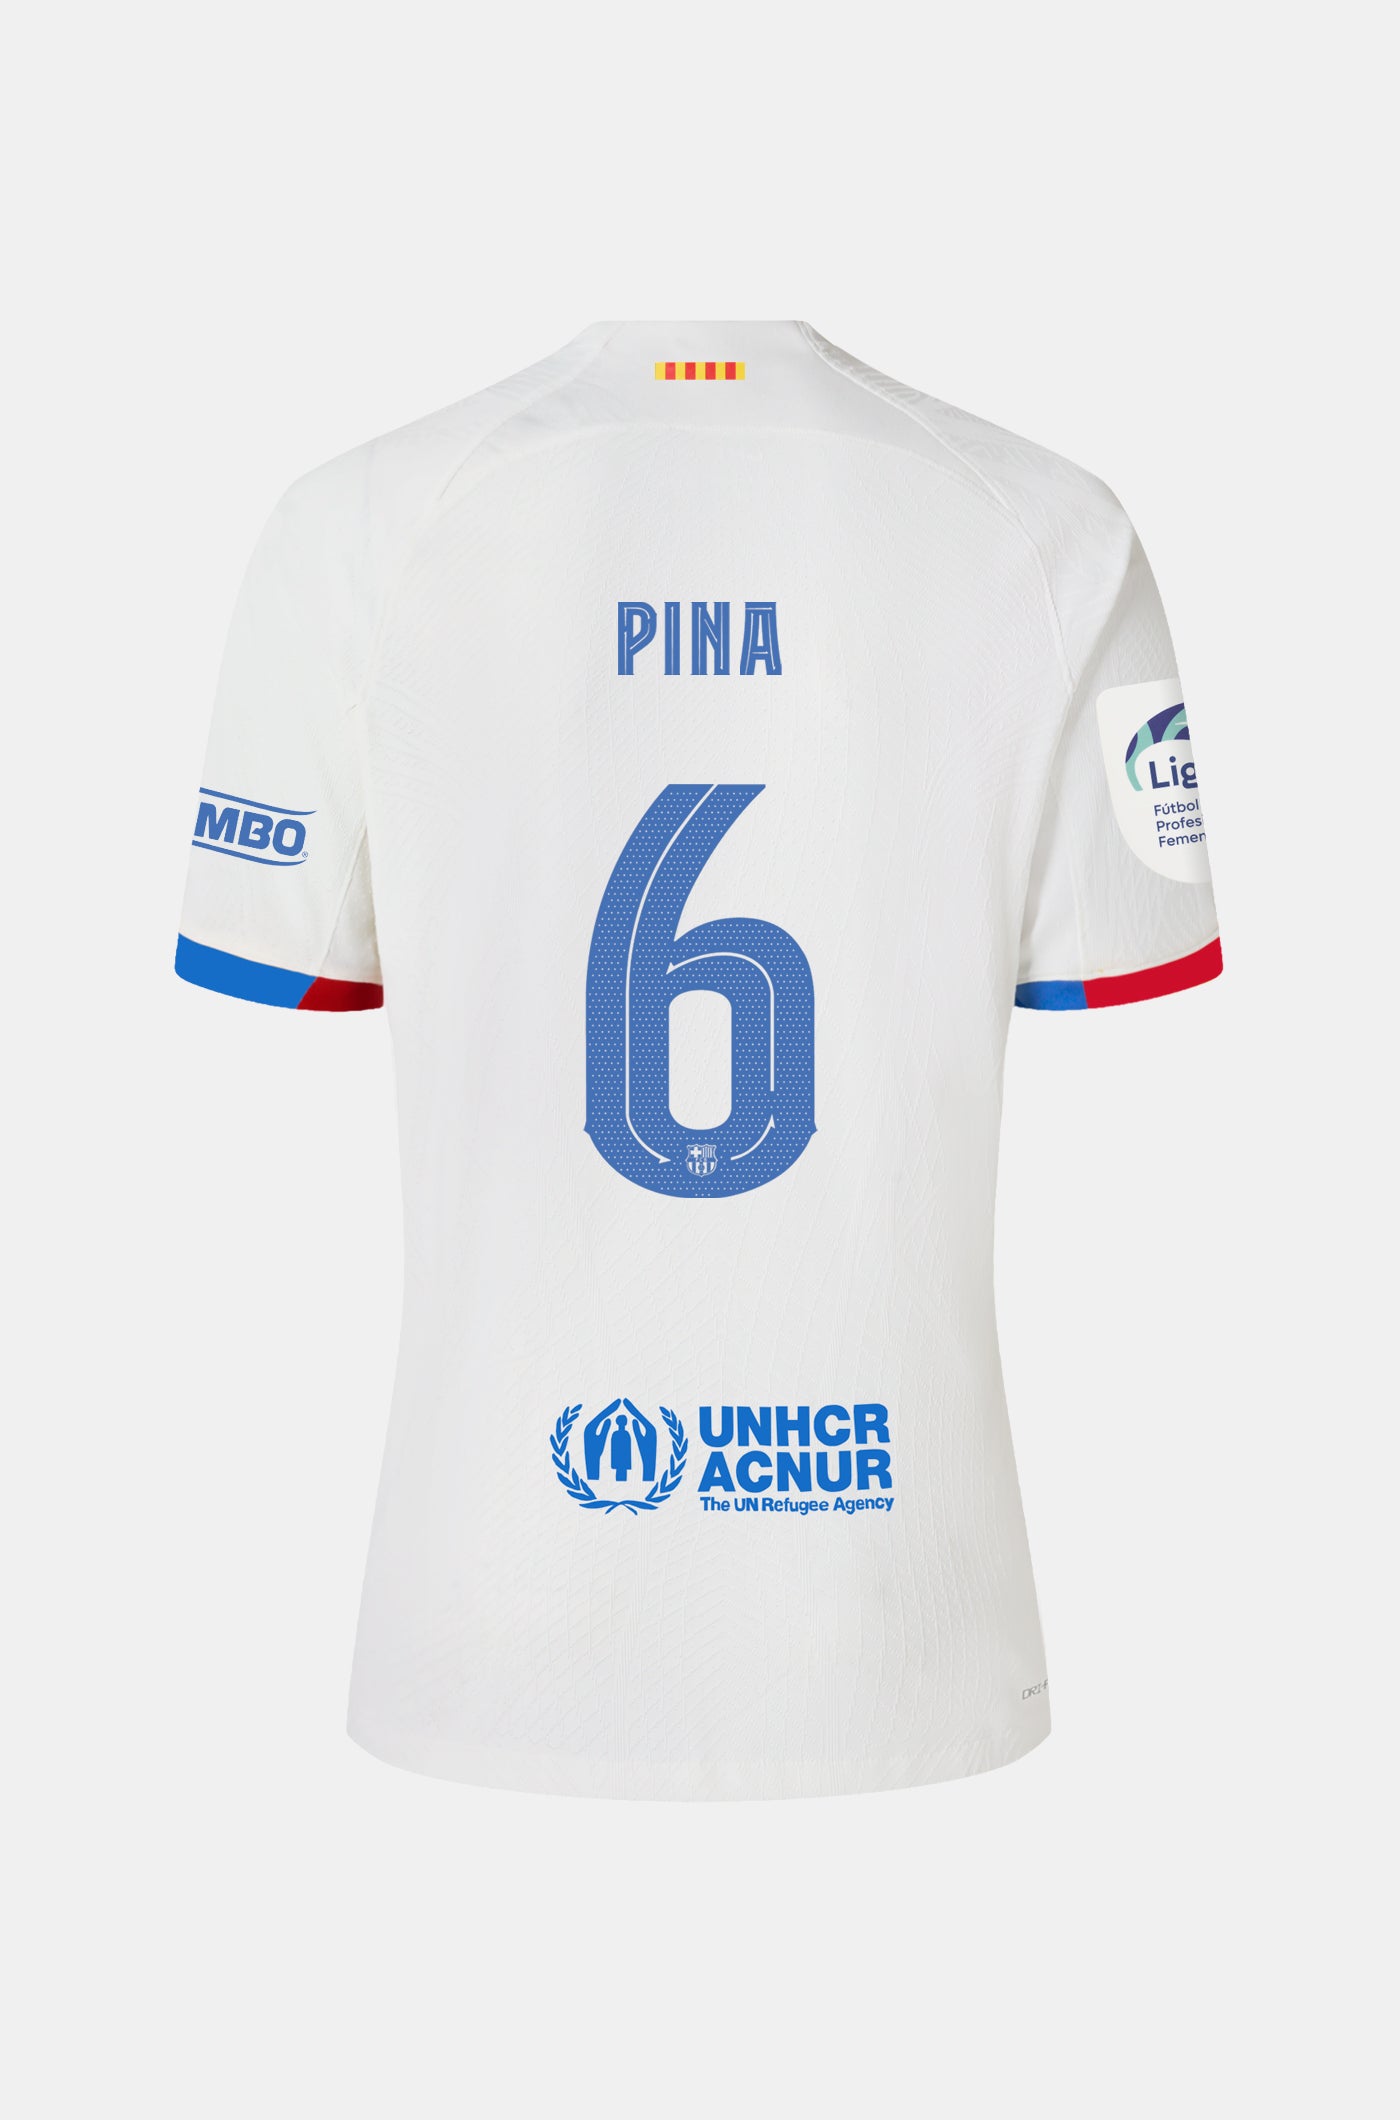 Liga F FC Barcelona away Shirt 23/24 Player’s Edition - Women  - PINA